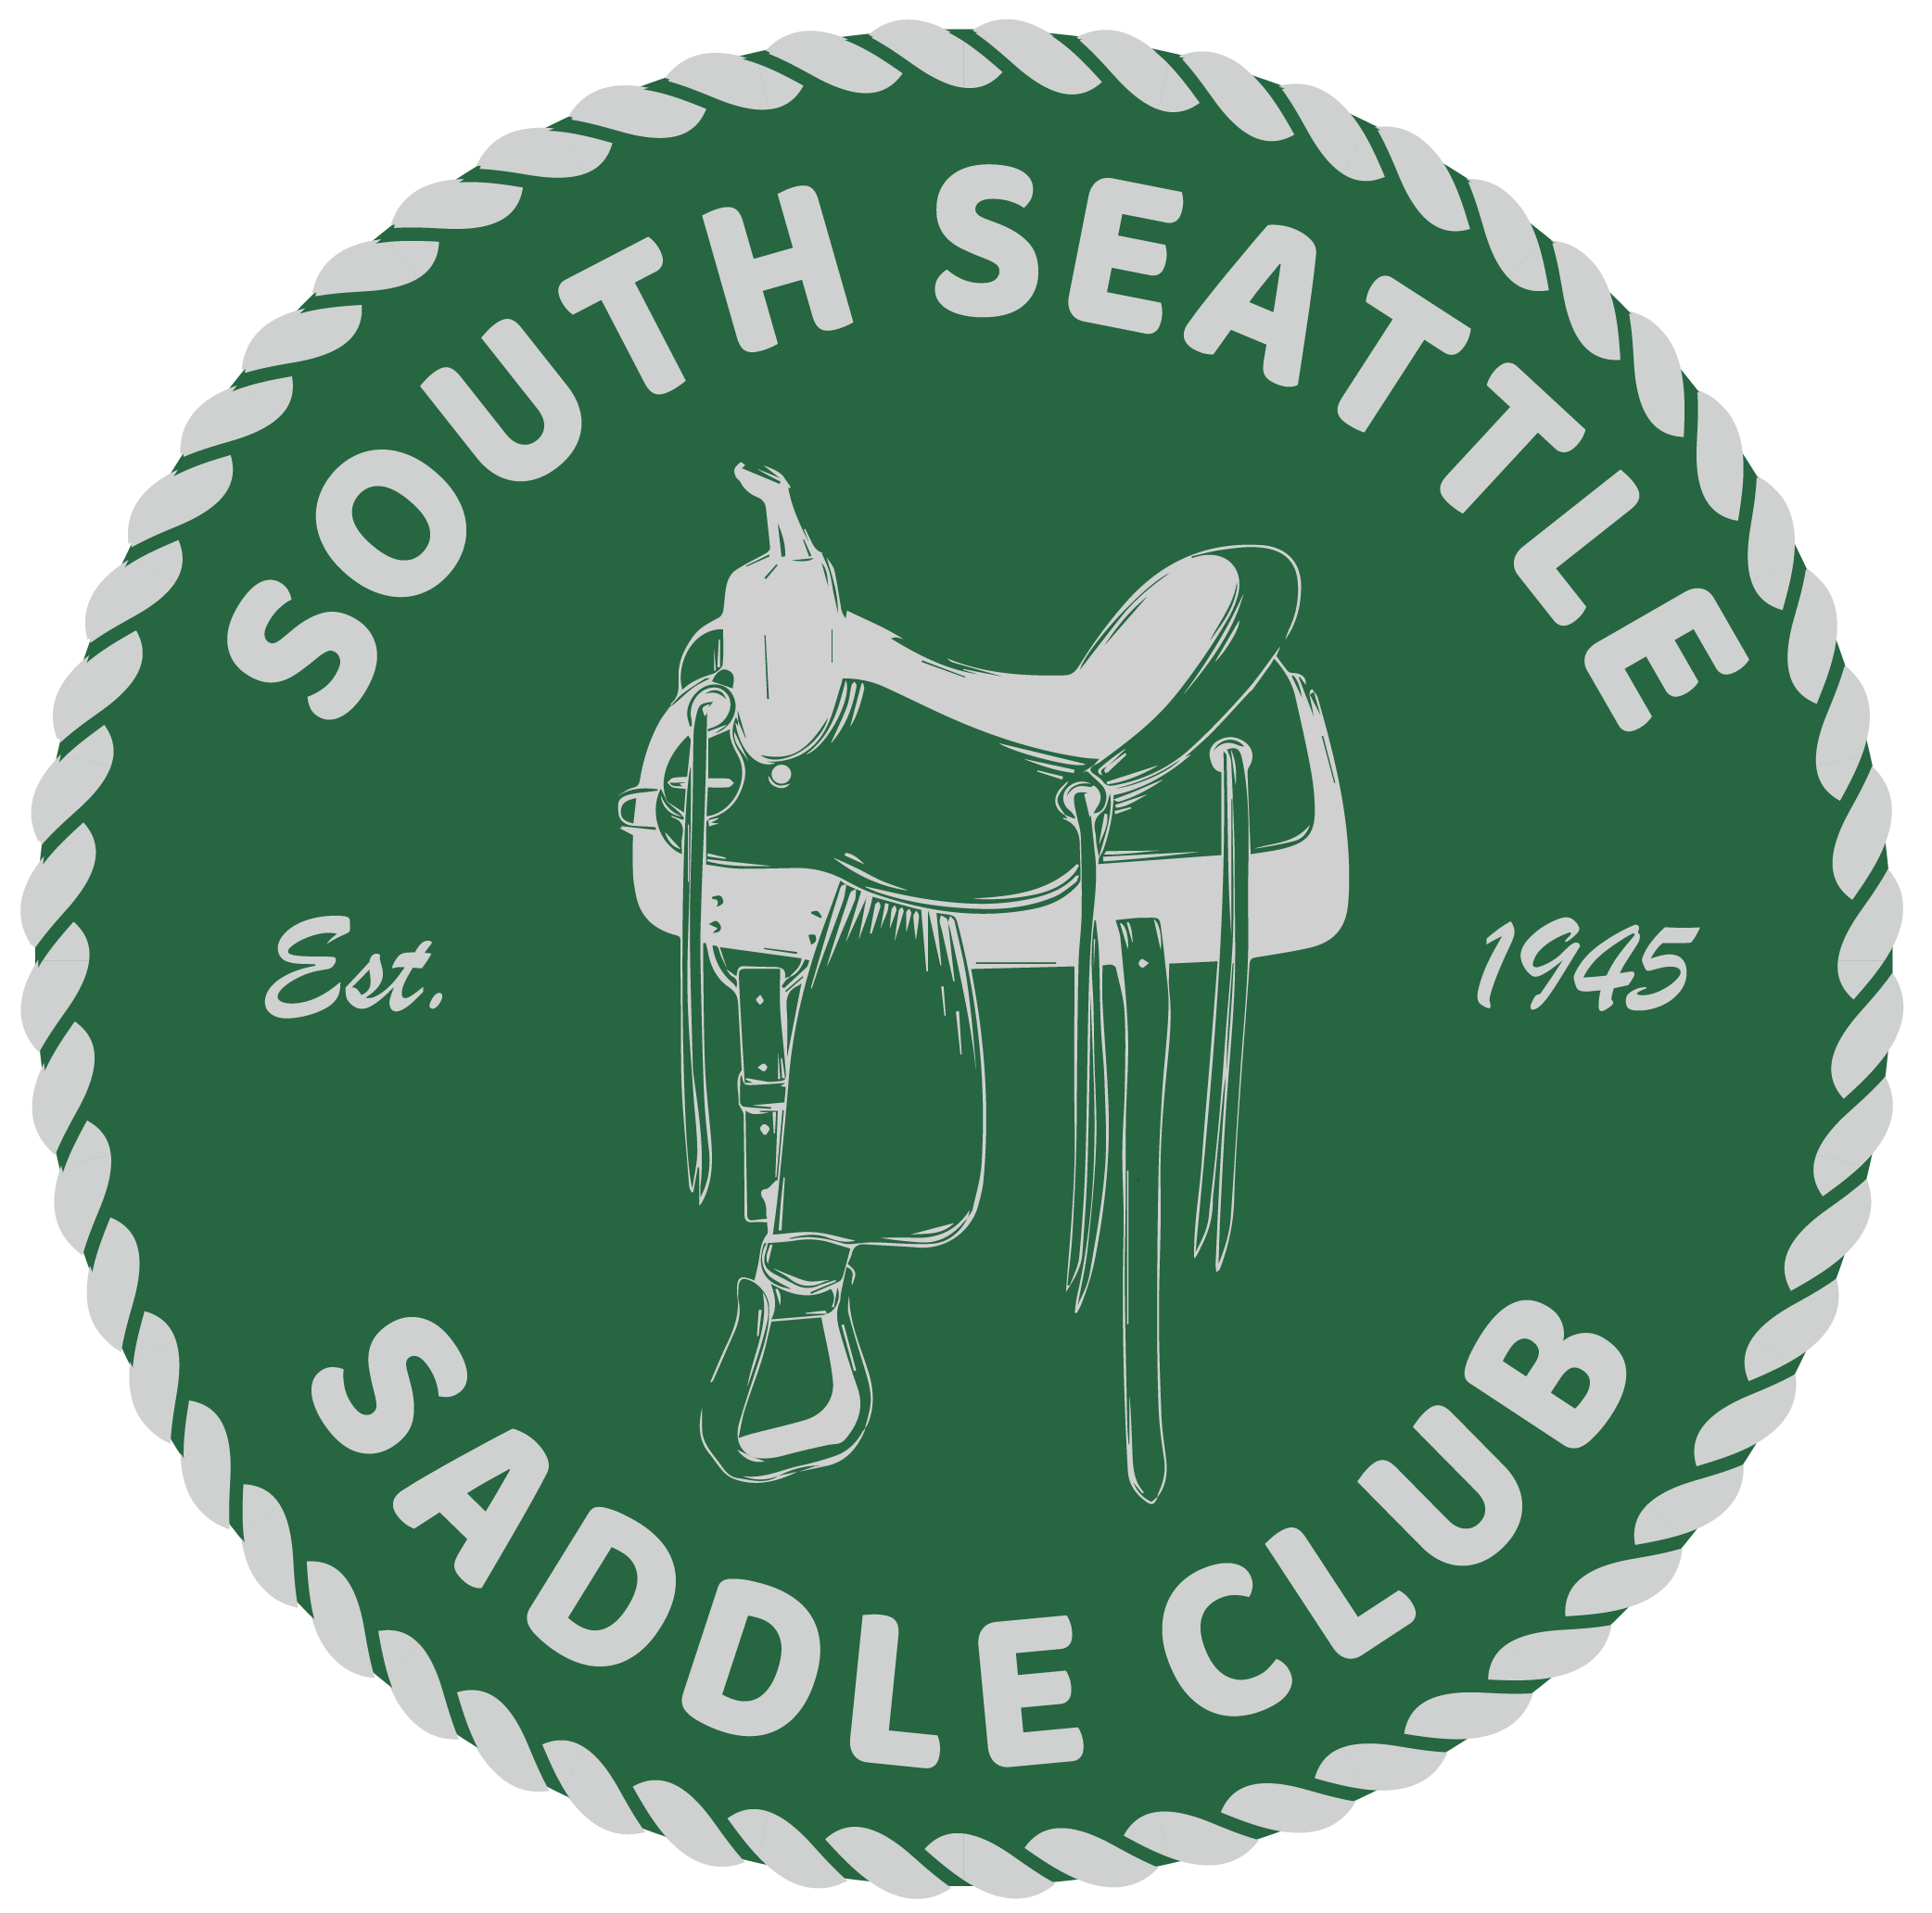 South Seattle Saddle Club